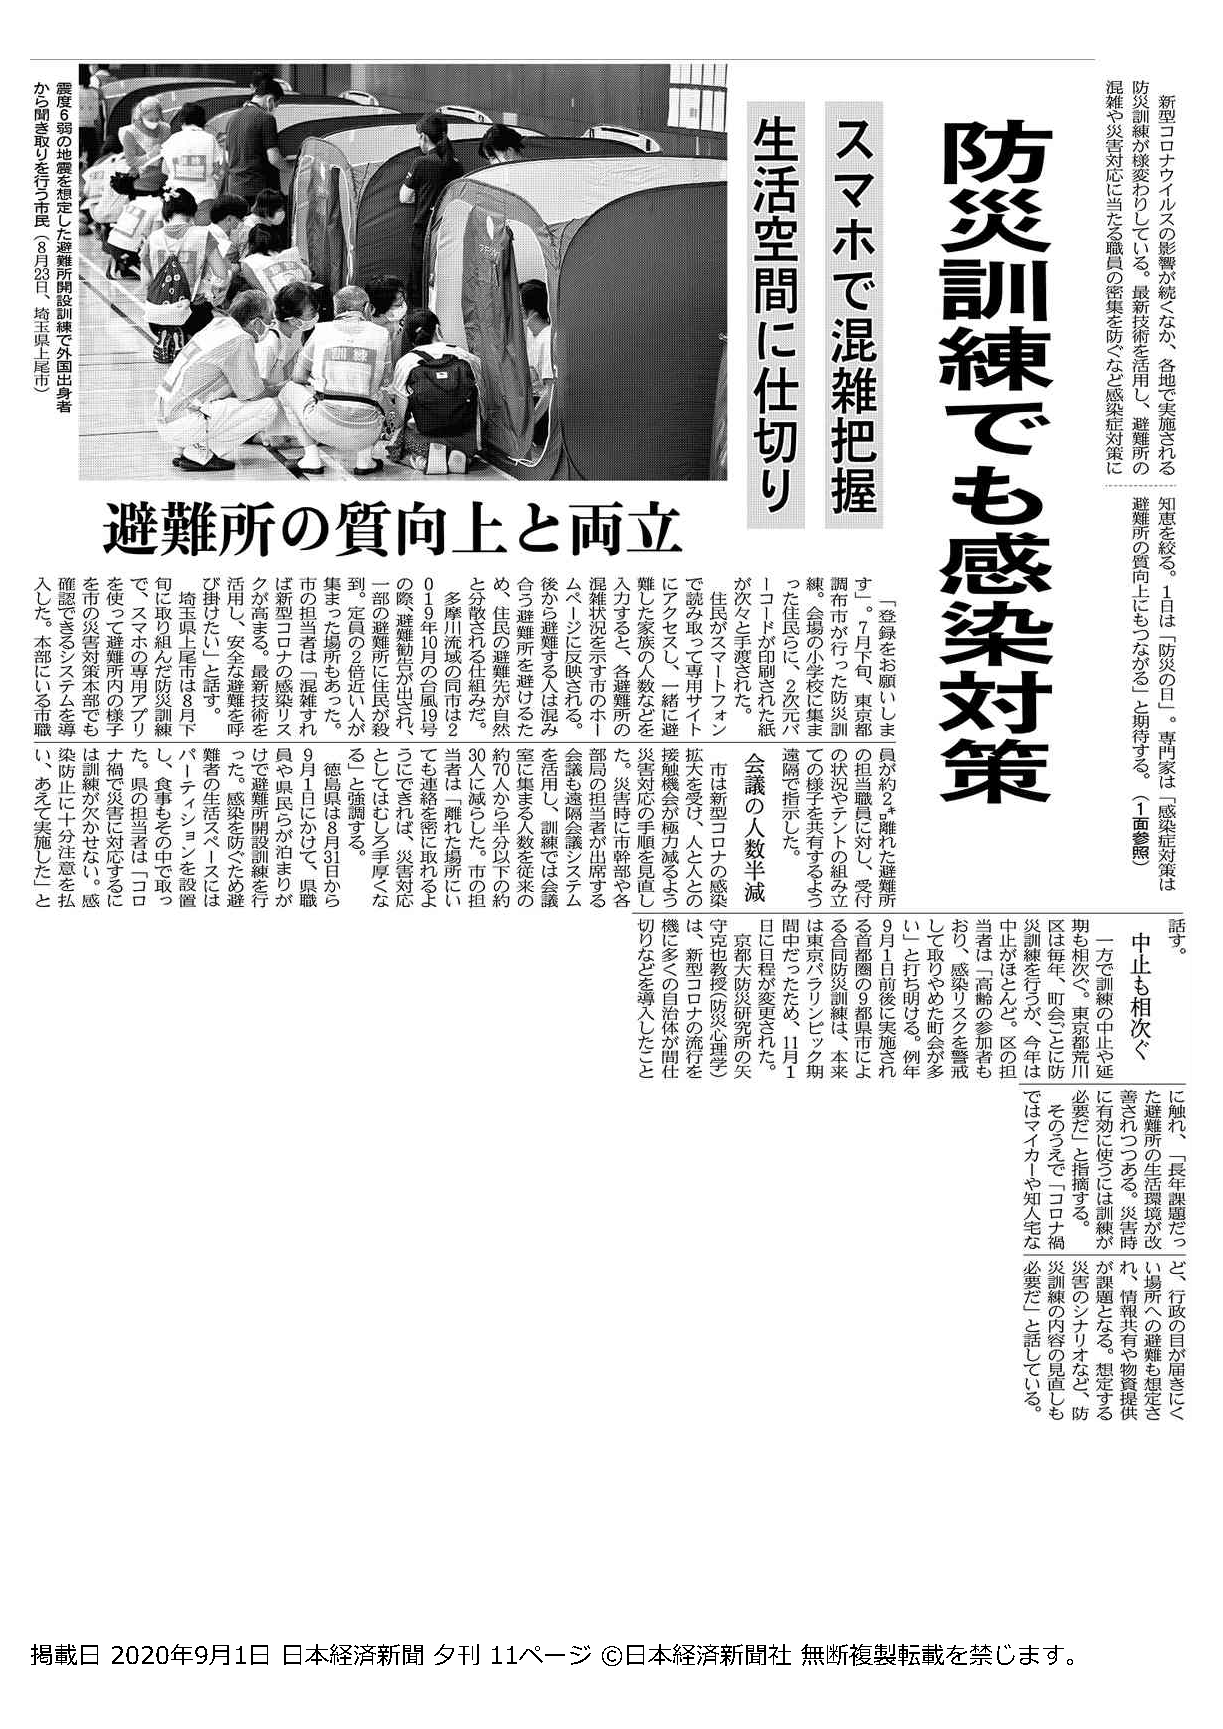 EDAC、埼玉県上尾市にて実施したコロナ禍のオンライン防災訓練＝「新しい防災訓練」 が日本経済新聞に掲載されました